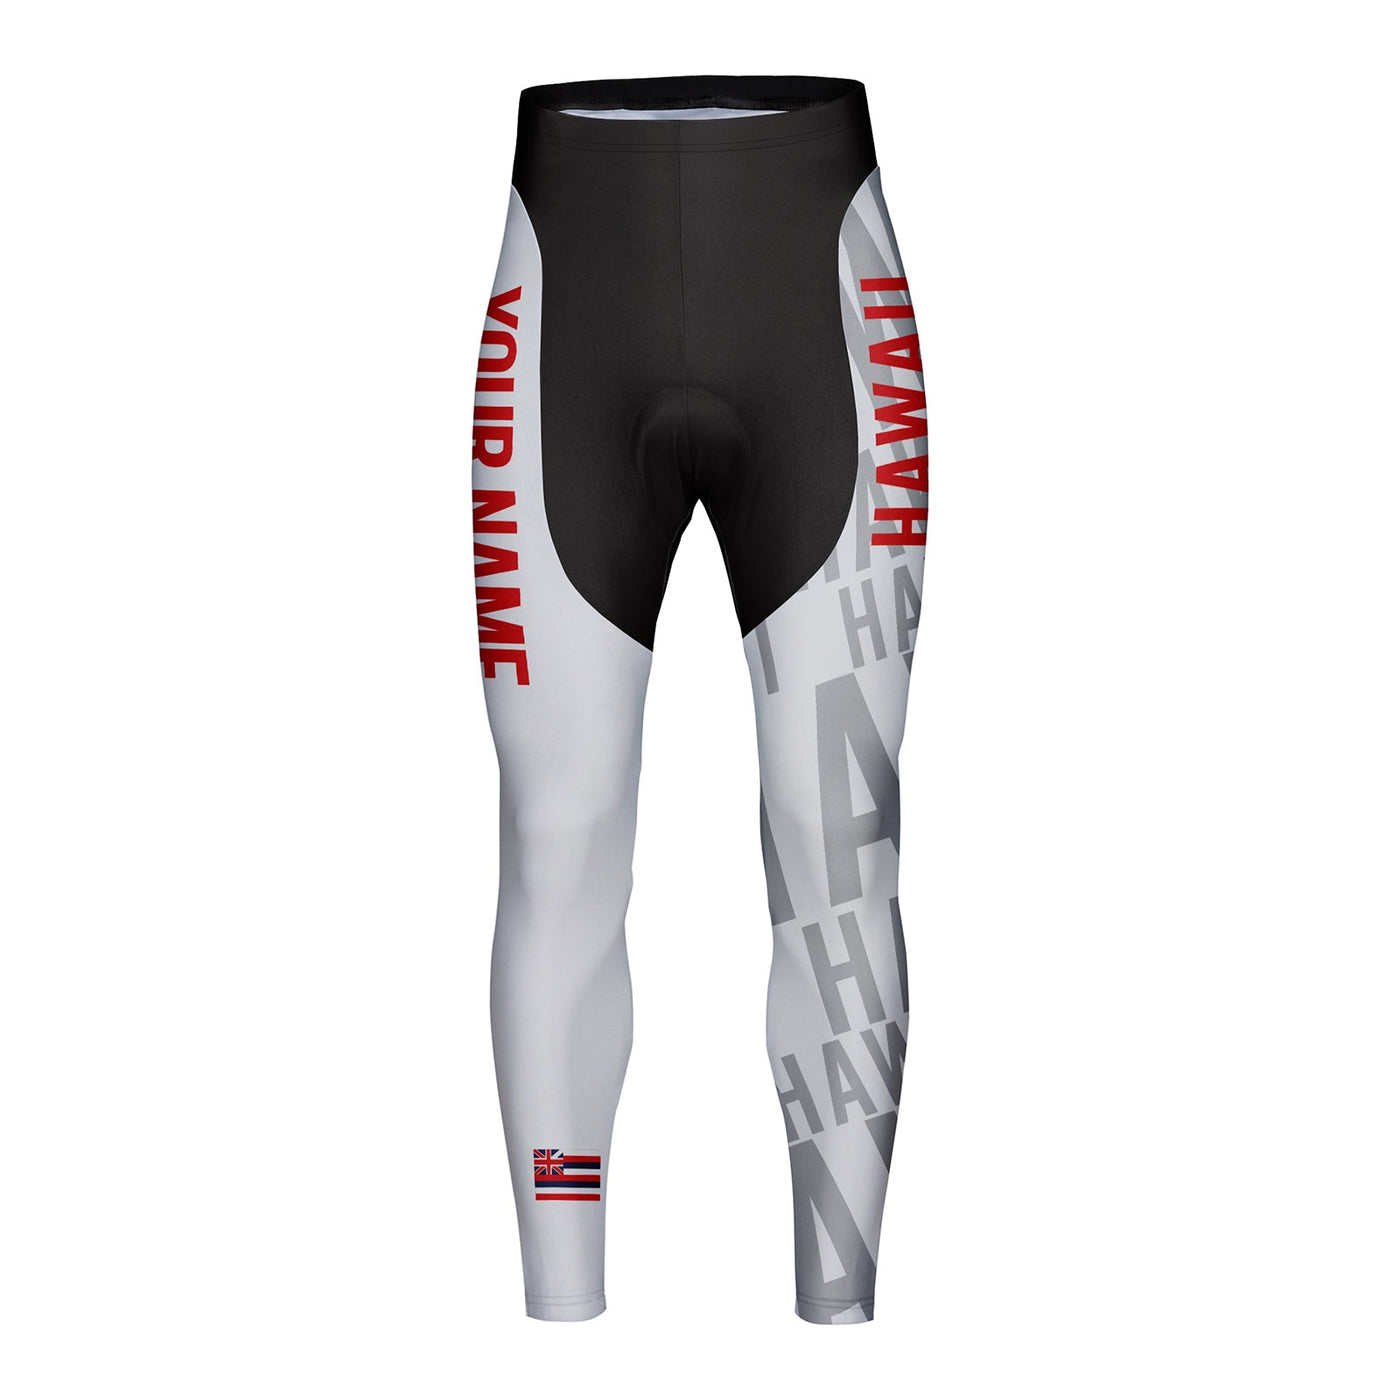 Customized Hawaii Unisex Thermal Fleece Cycling Tights Long Pants